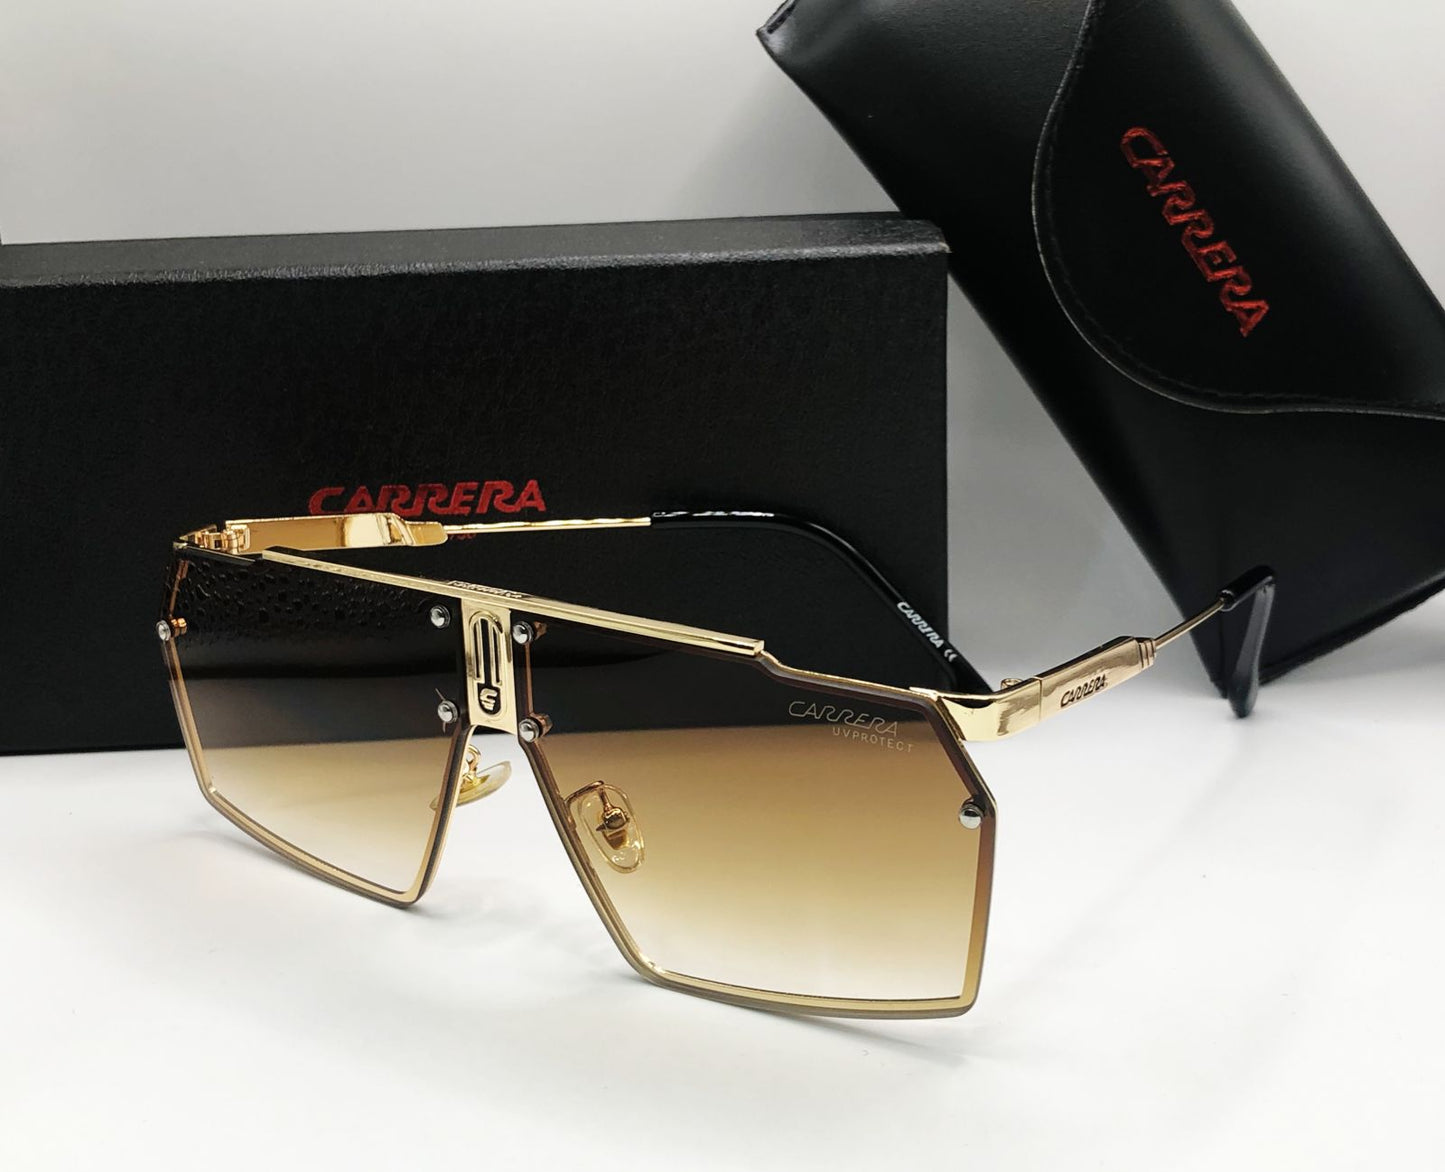 Carrera Hot Selling Sunglasses !